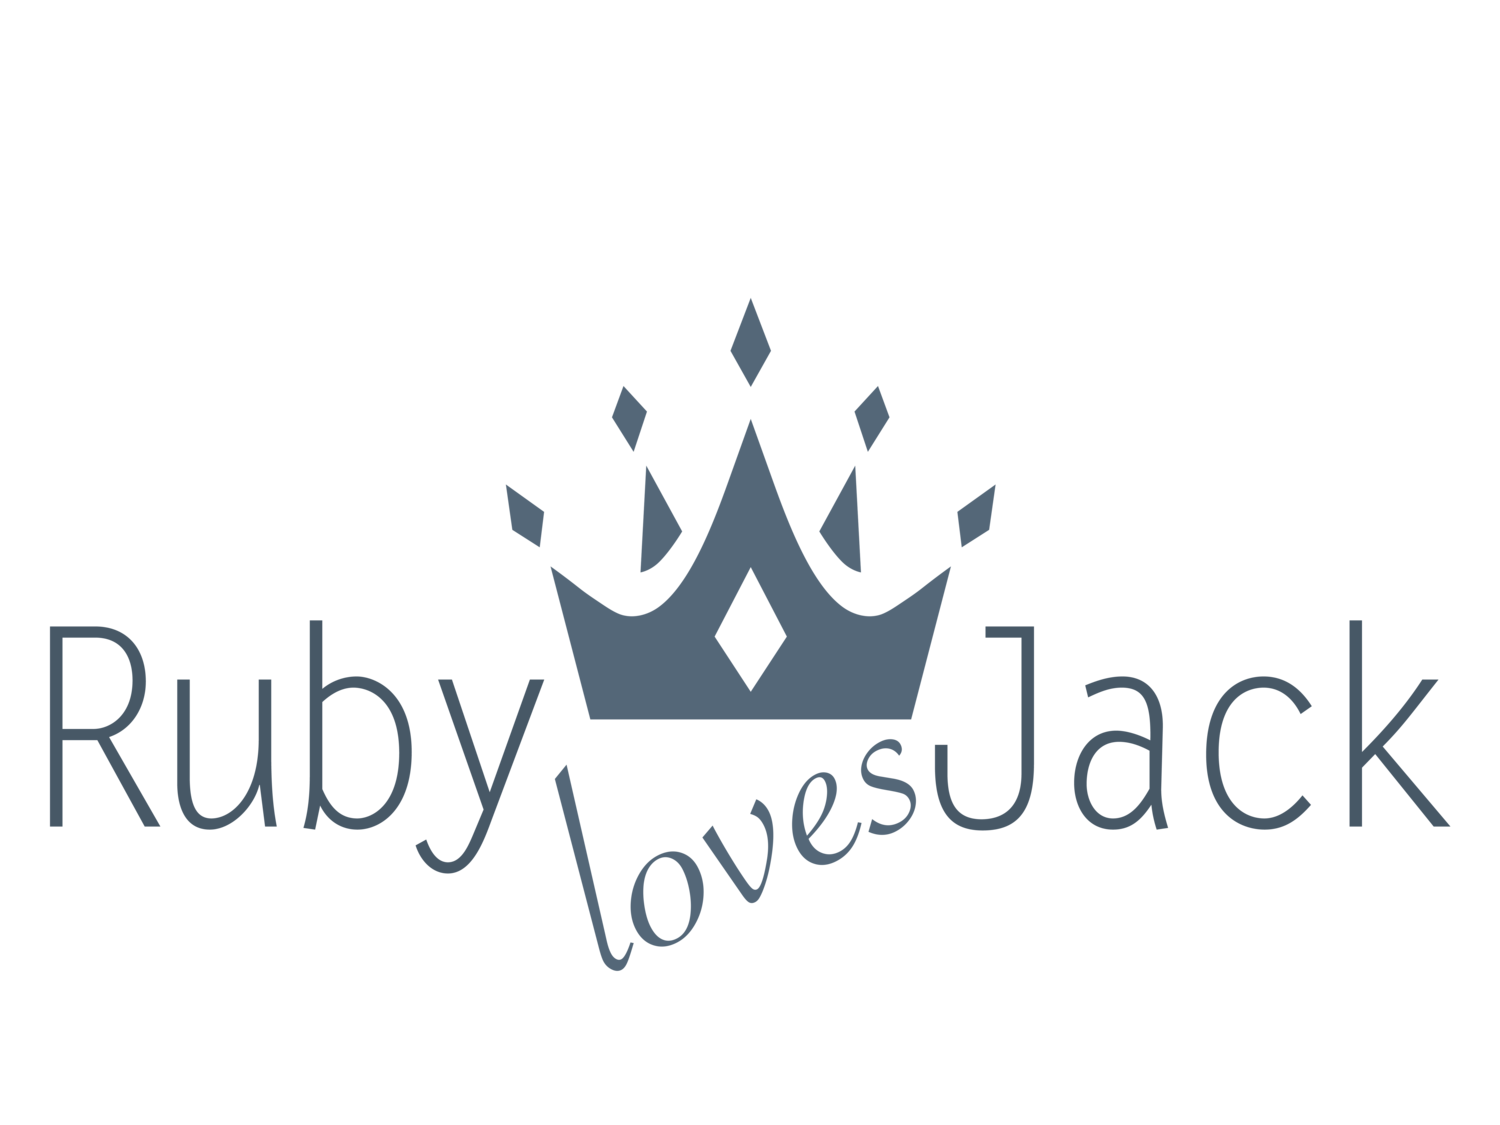 Ruby loves Jack